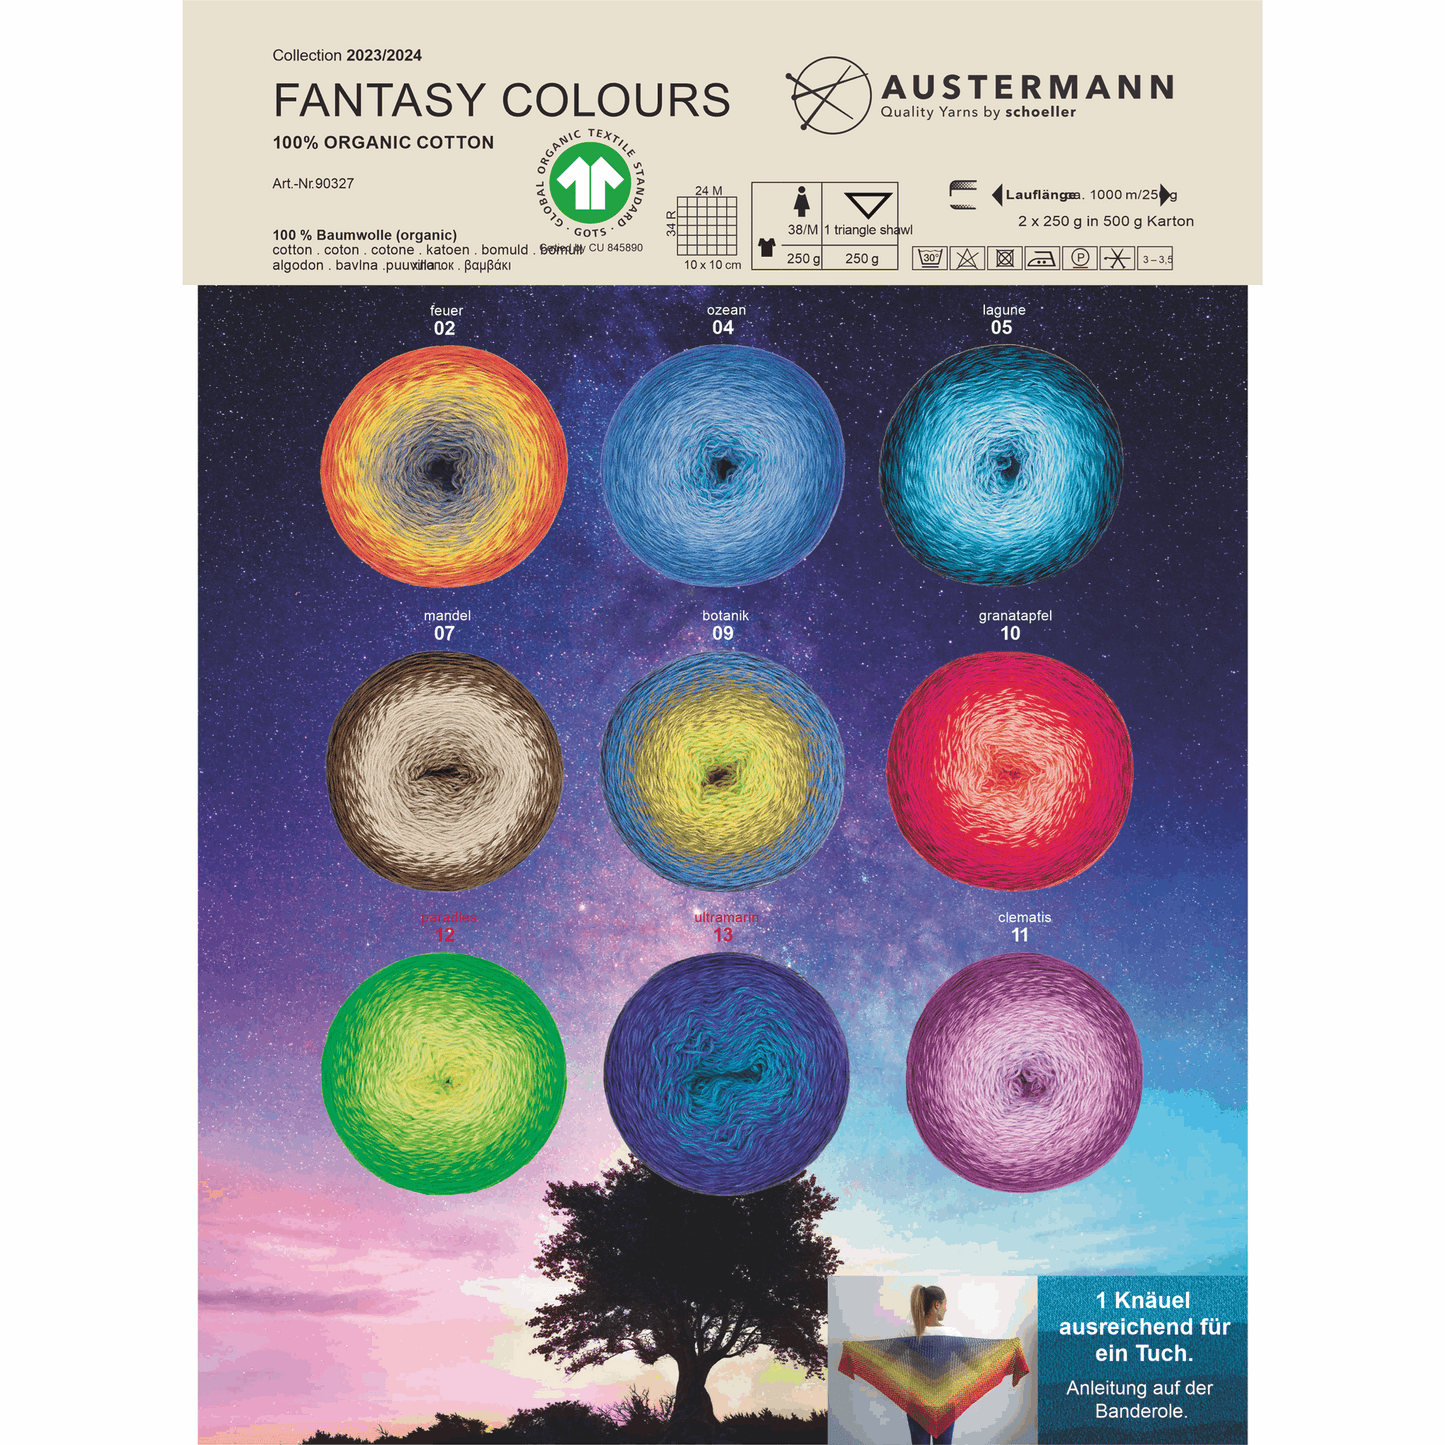 Fantasy colours 250g, 90327, Farbe 10, grüner apfel